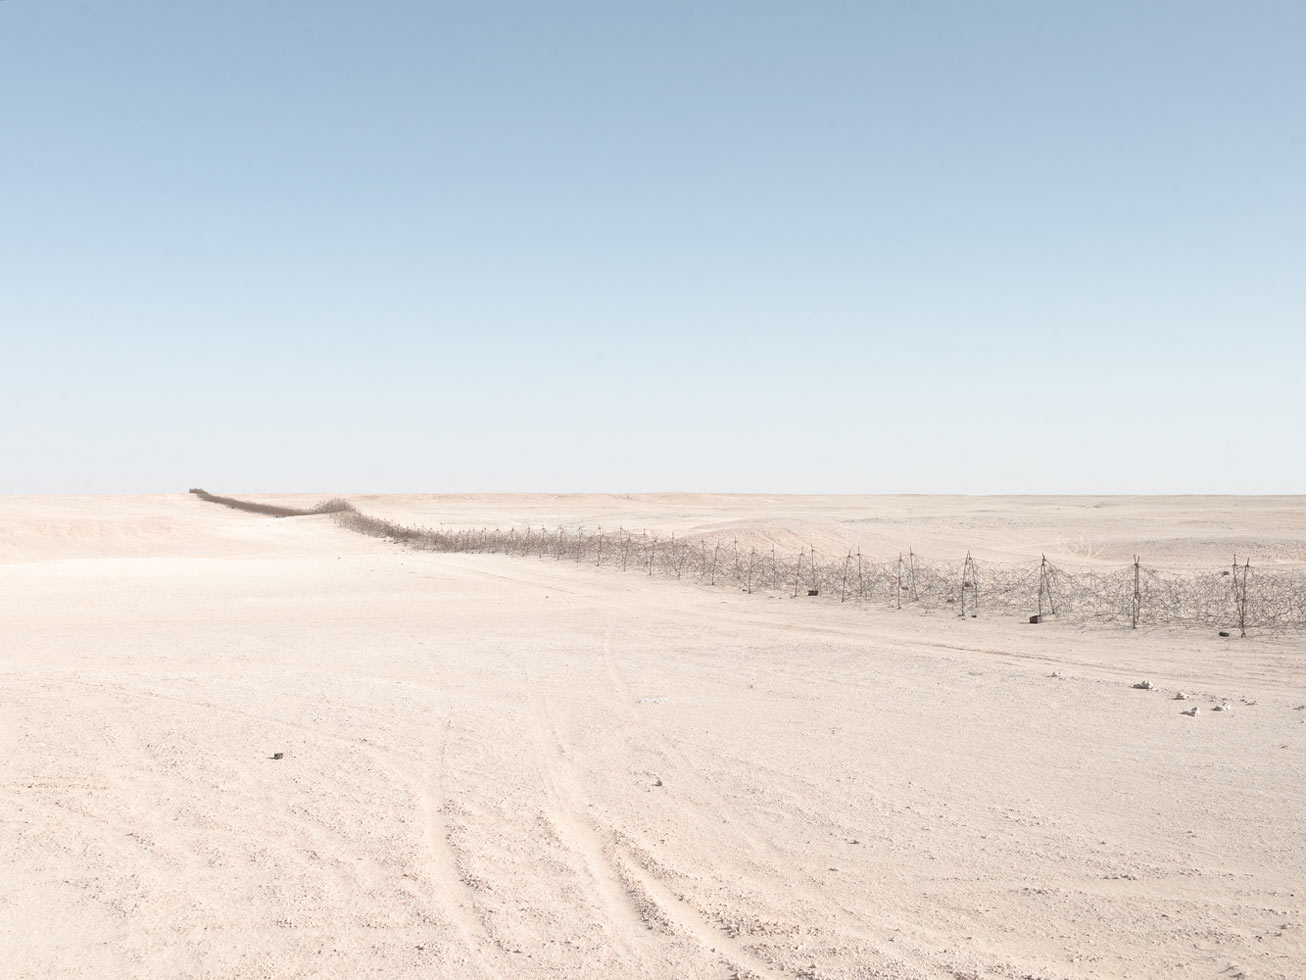 Graziani's Fence (270 km of barbed-wire).
Near Jaghbub, Libya